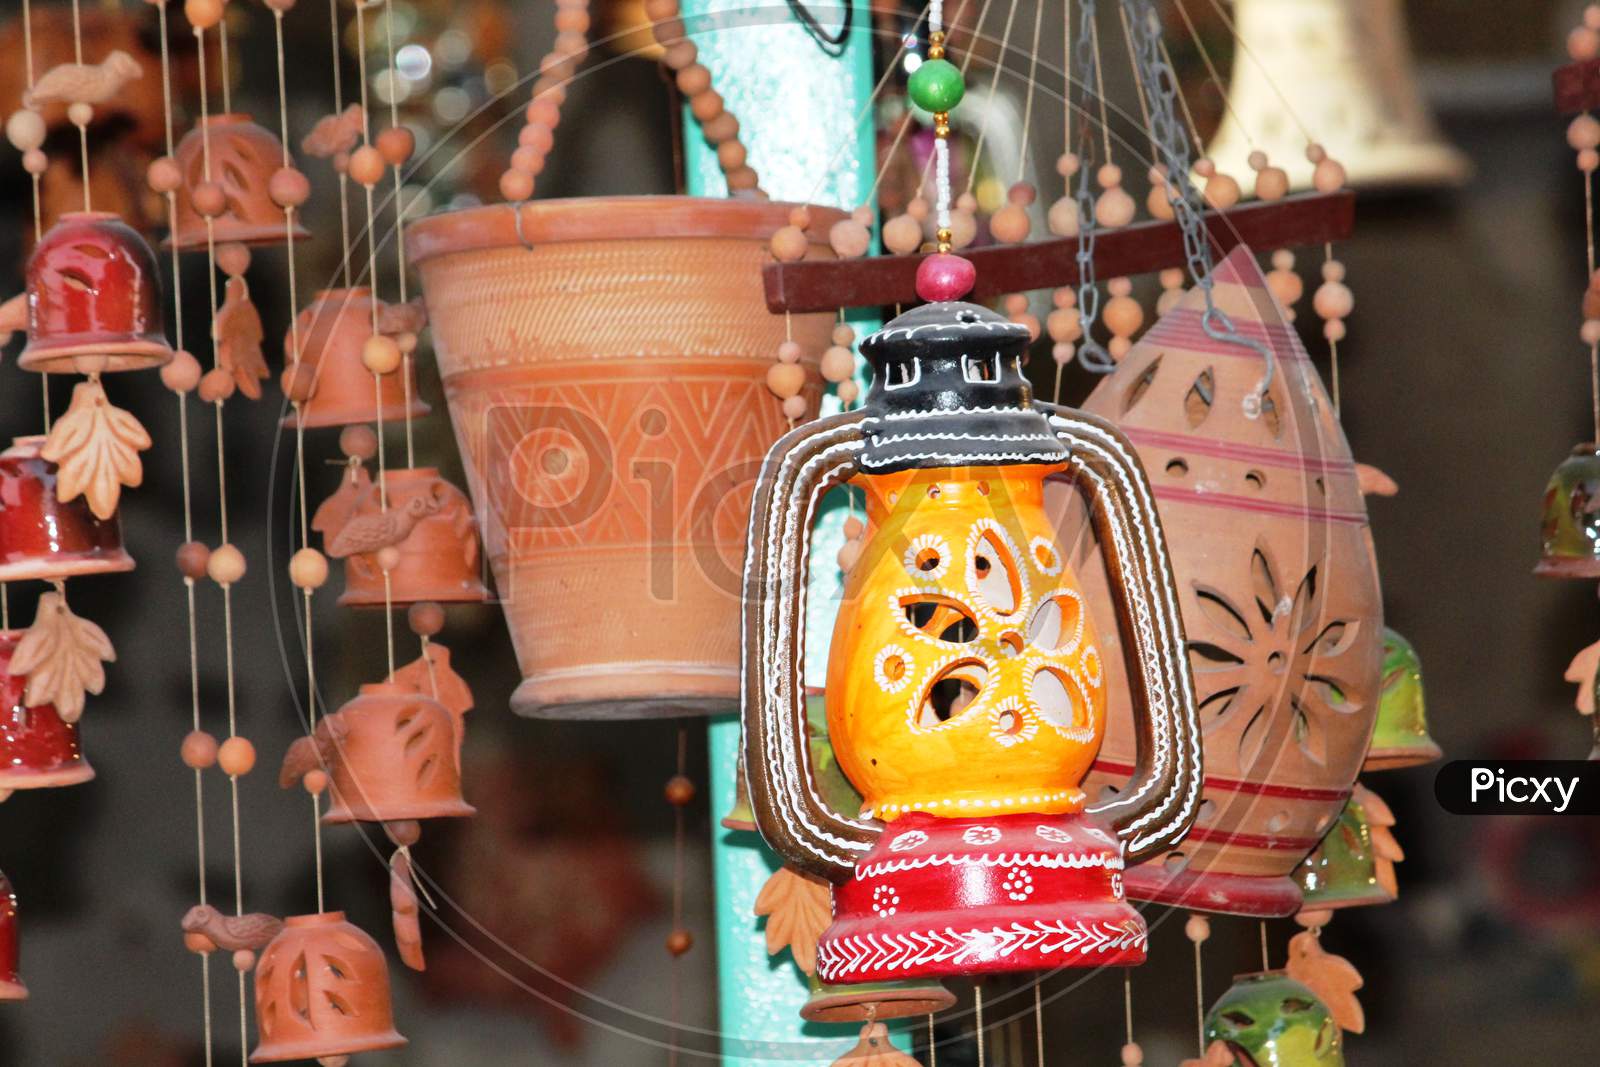 handmade artifacts for sale in Jodhpur